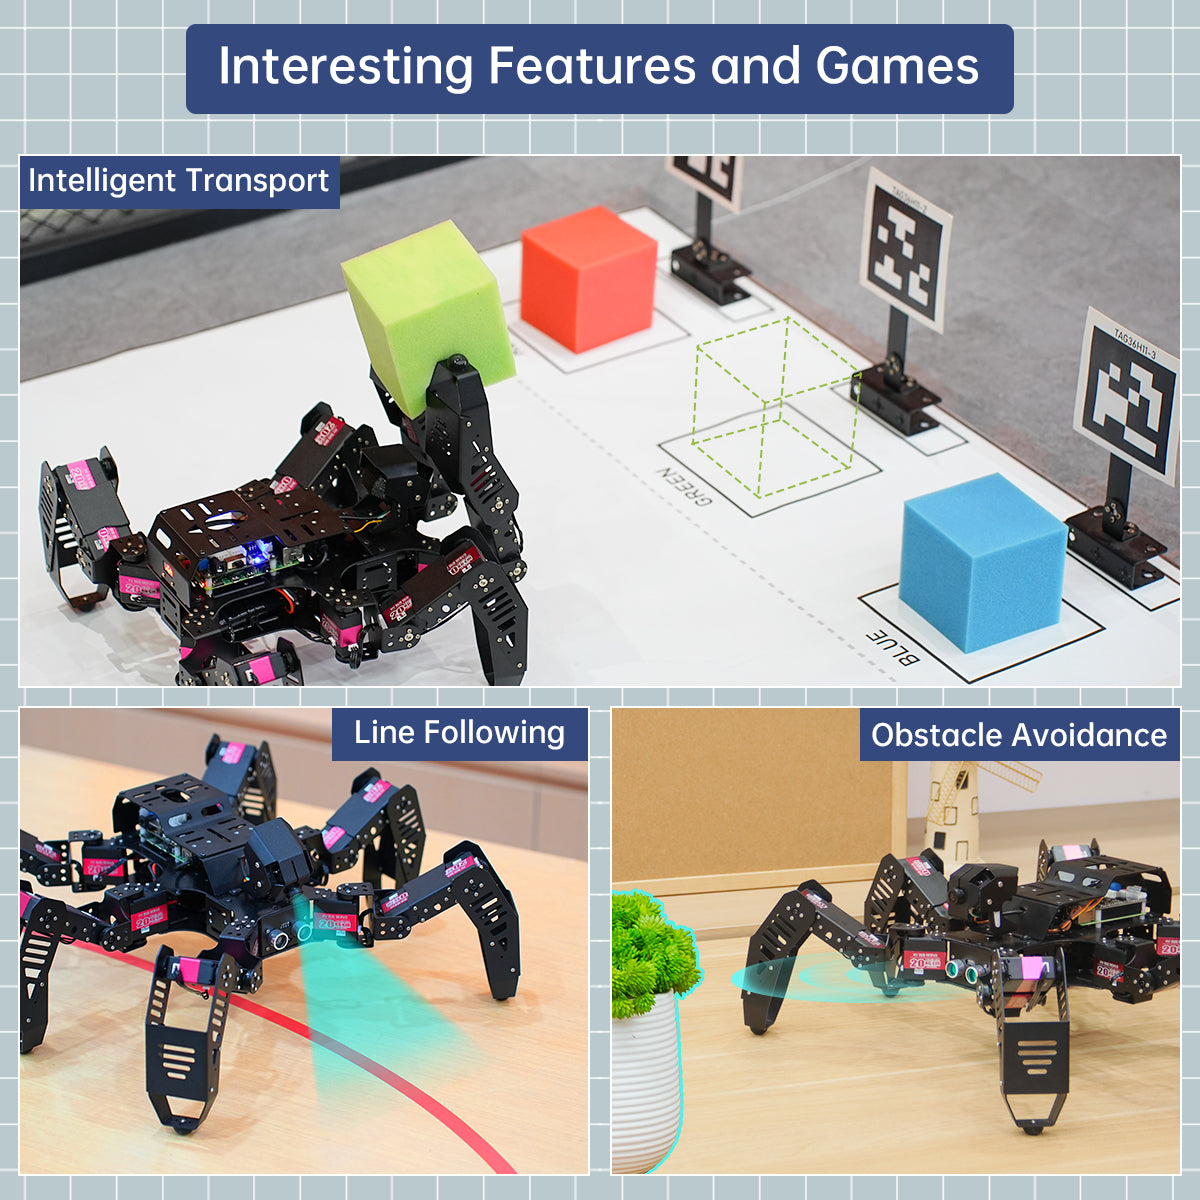 Hiwonder SpiderPi: AI Intelligent Visual Hexapod Robot Powered by Raspberry Pi  4B 4GB